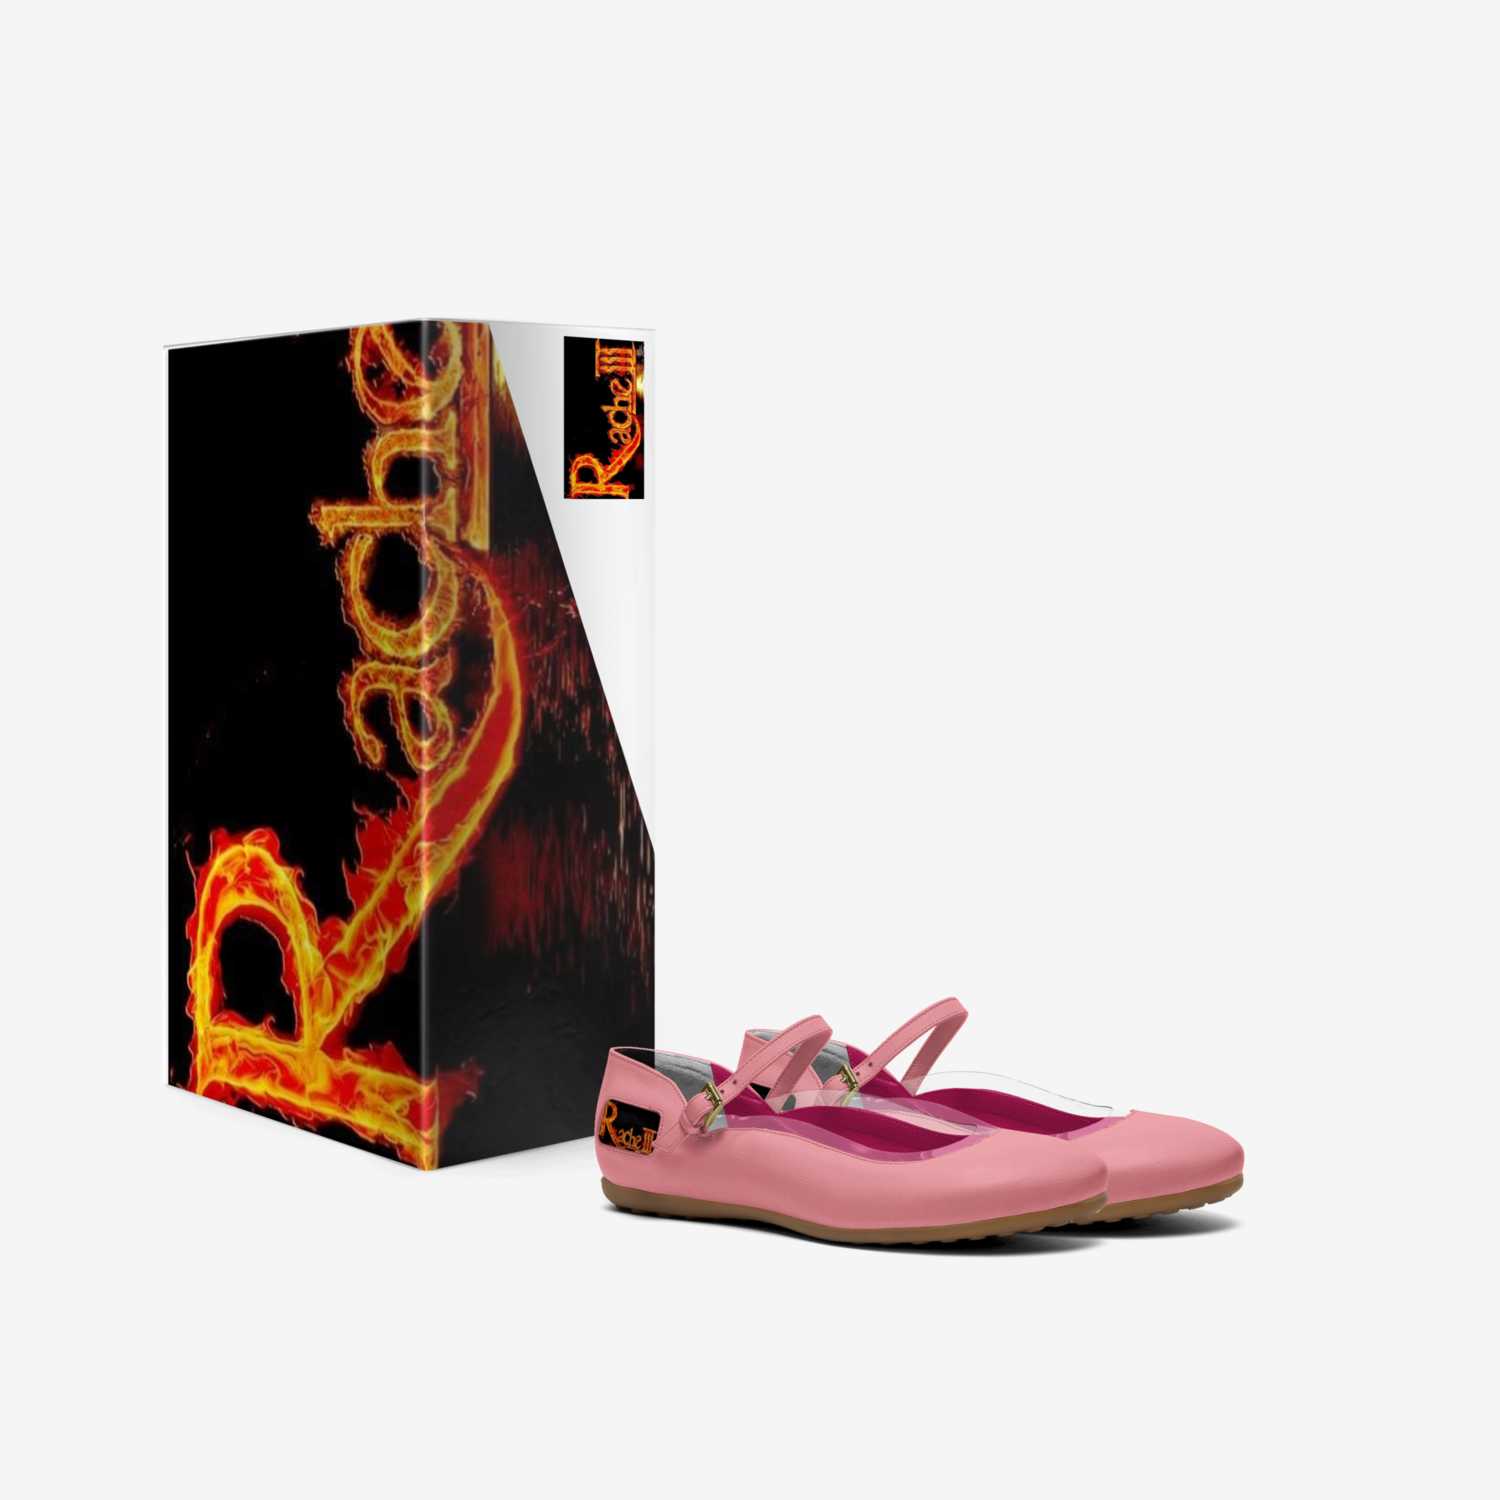 TRIPPLE_KIDS custom made in Italy shoes by Rachel Ekinde | Box view